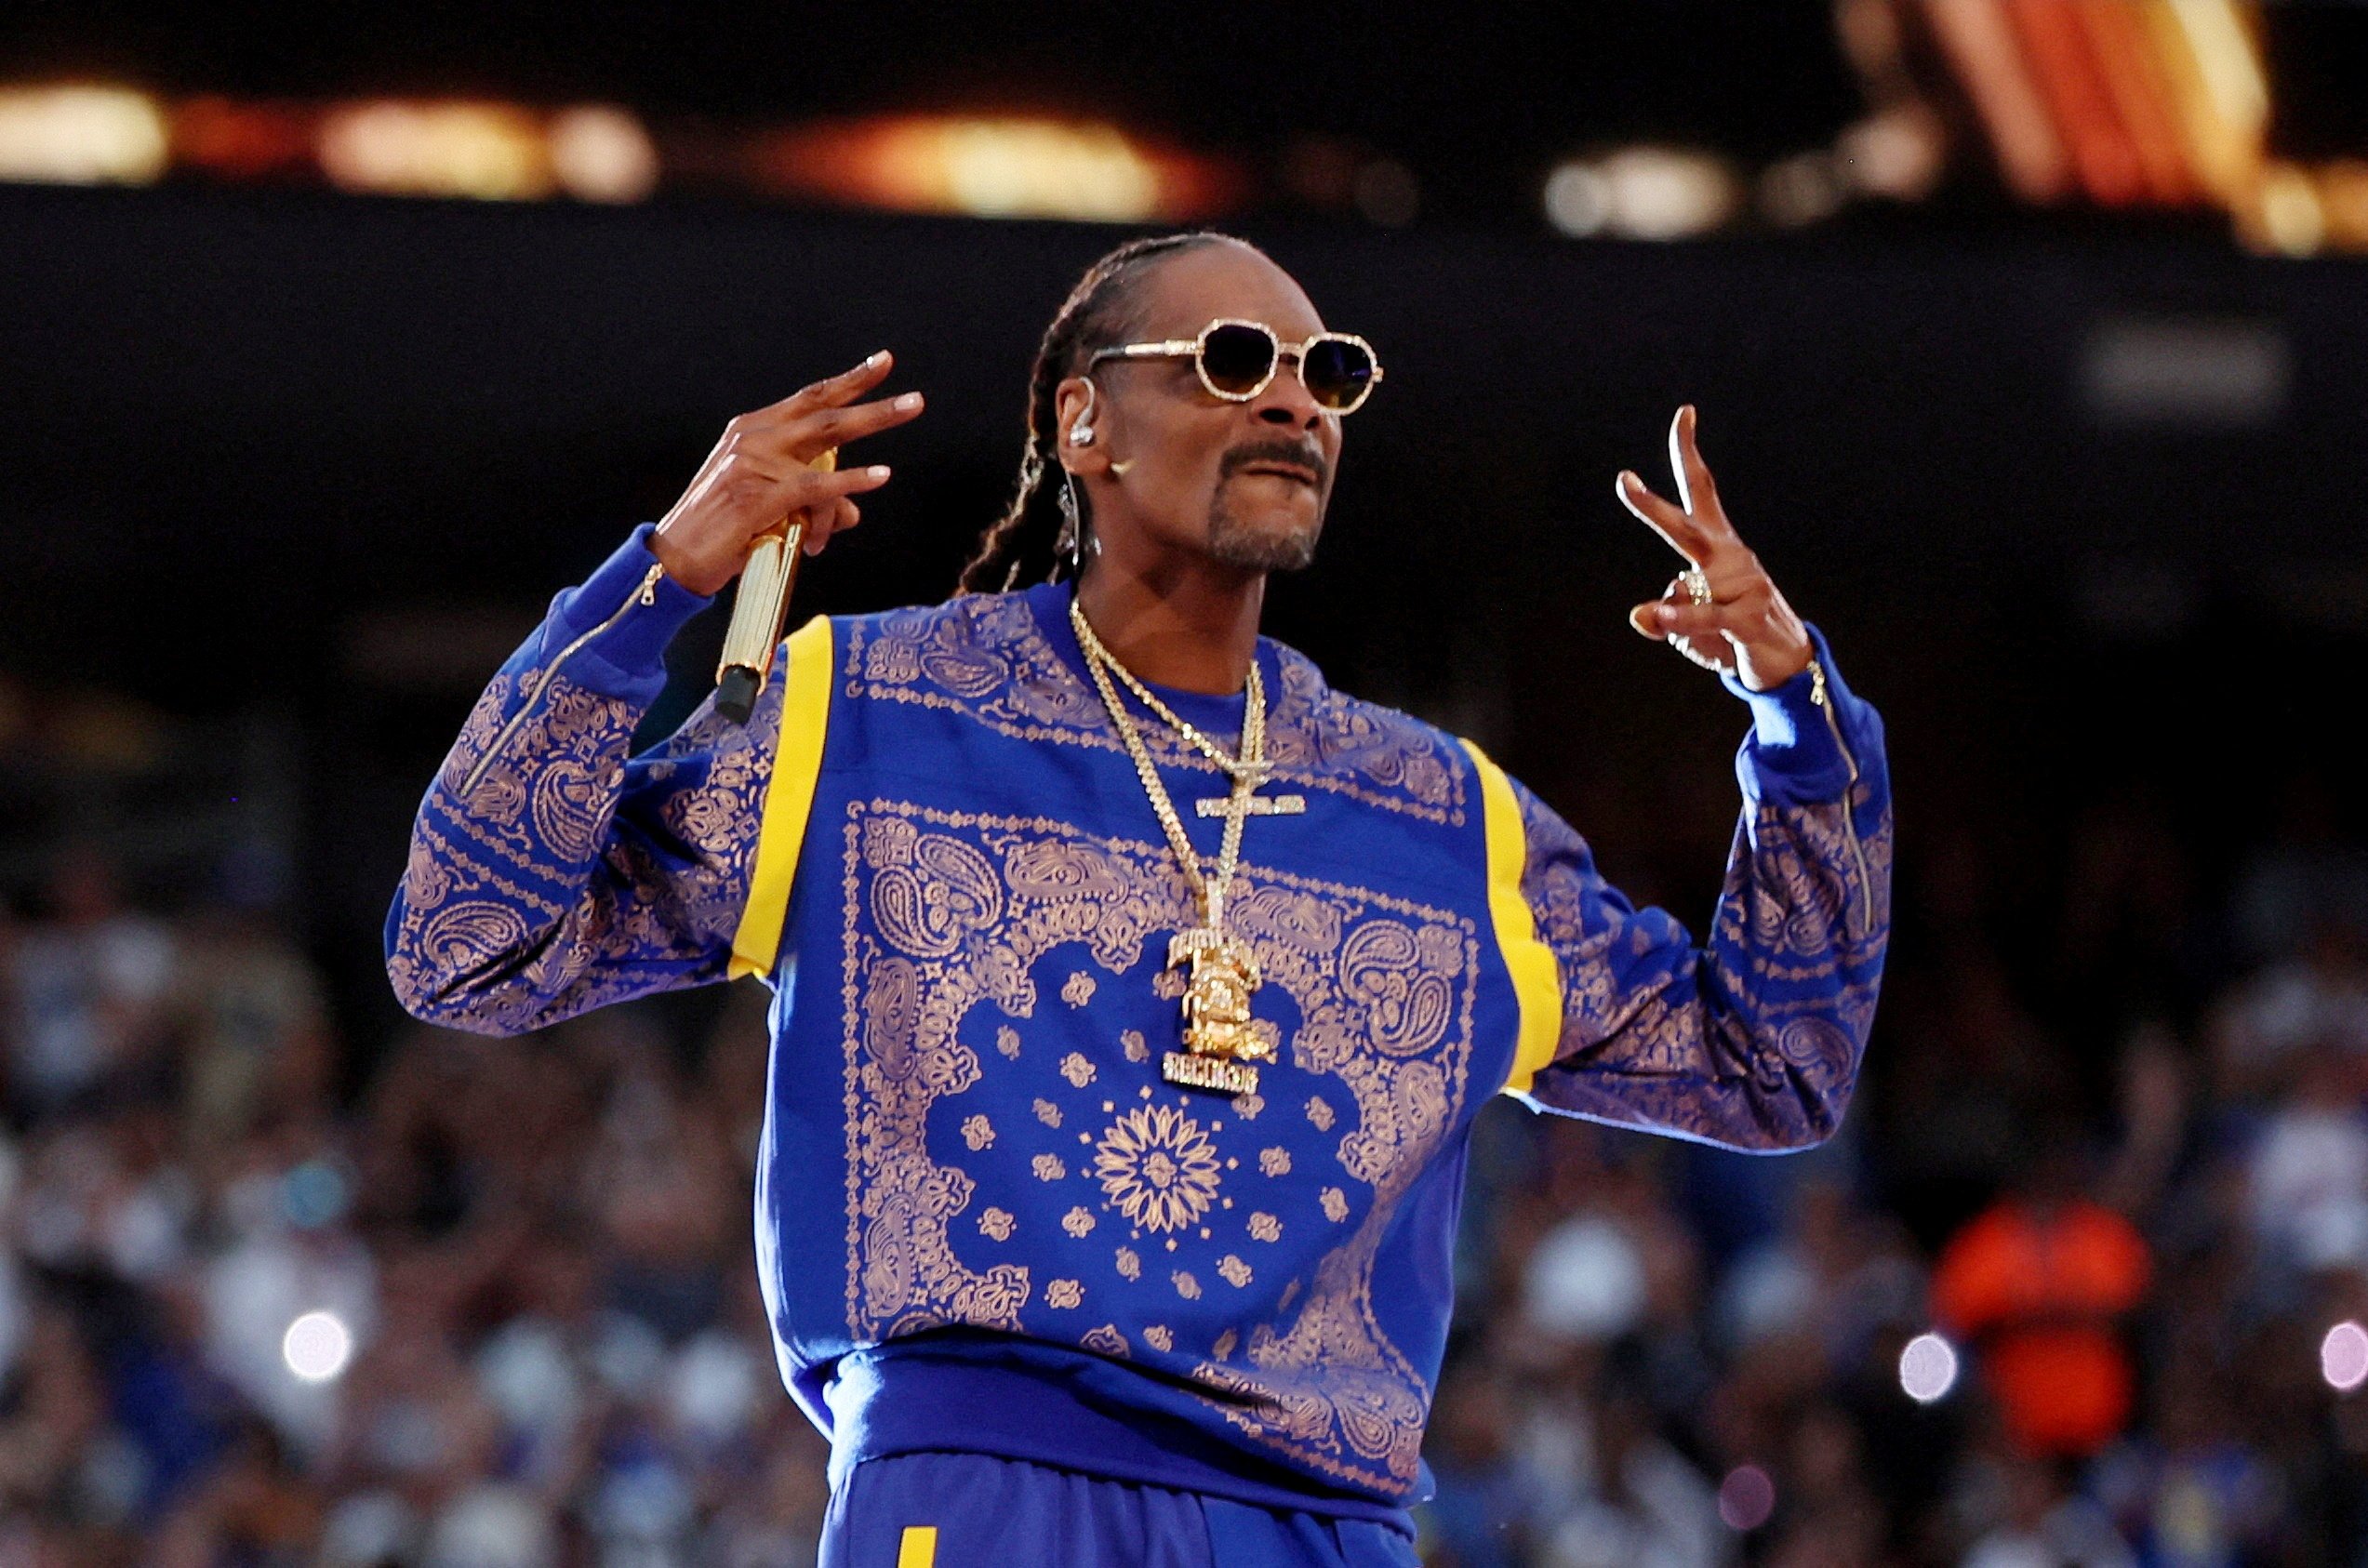 Snoop Dogg performs during the halftime show at SoFi Stadium, Inglewood, California, U.S., Feb. 13, 2022, Inglewood, California, U.S. (Reuters Photo)